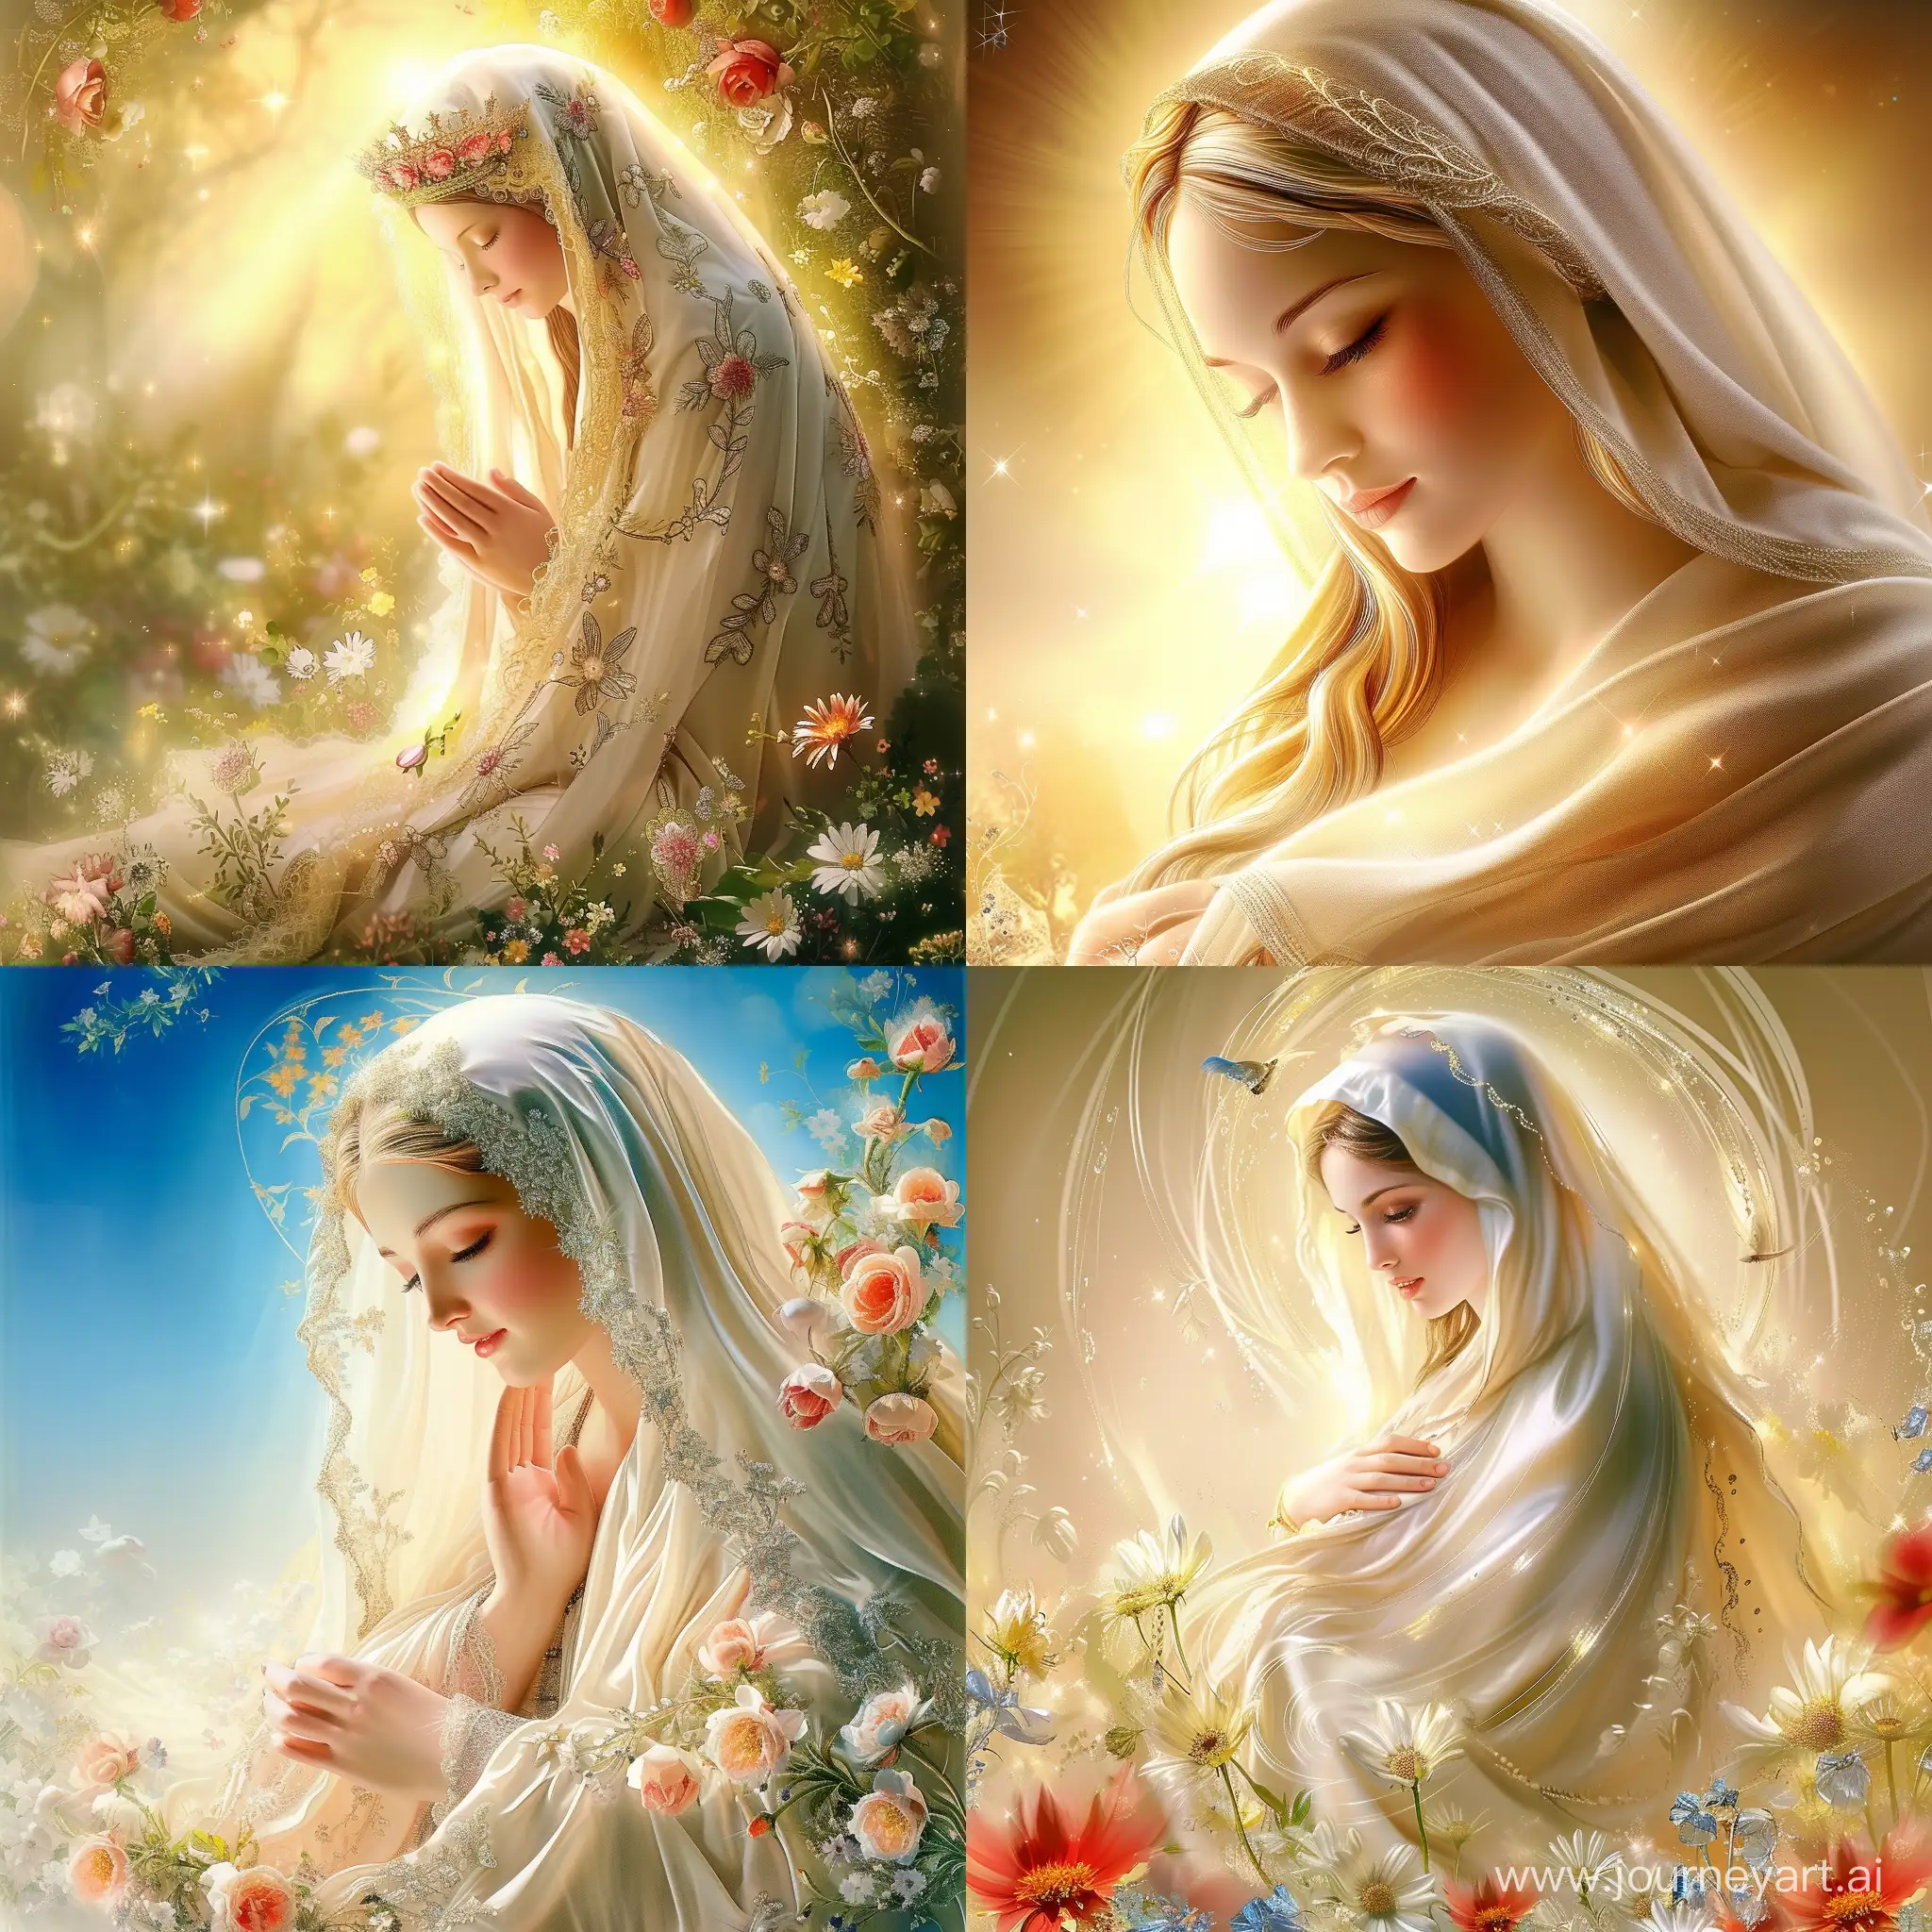 Virgin-Mary-in-Divine-Serenity